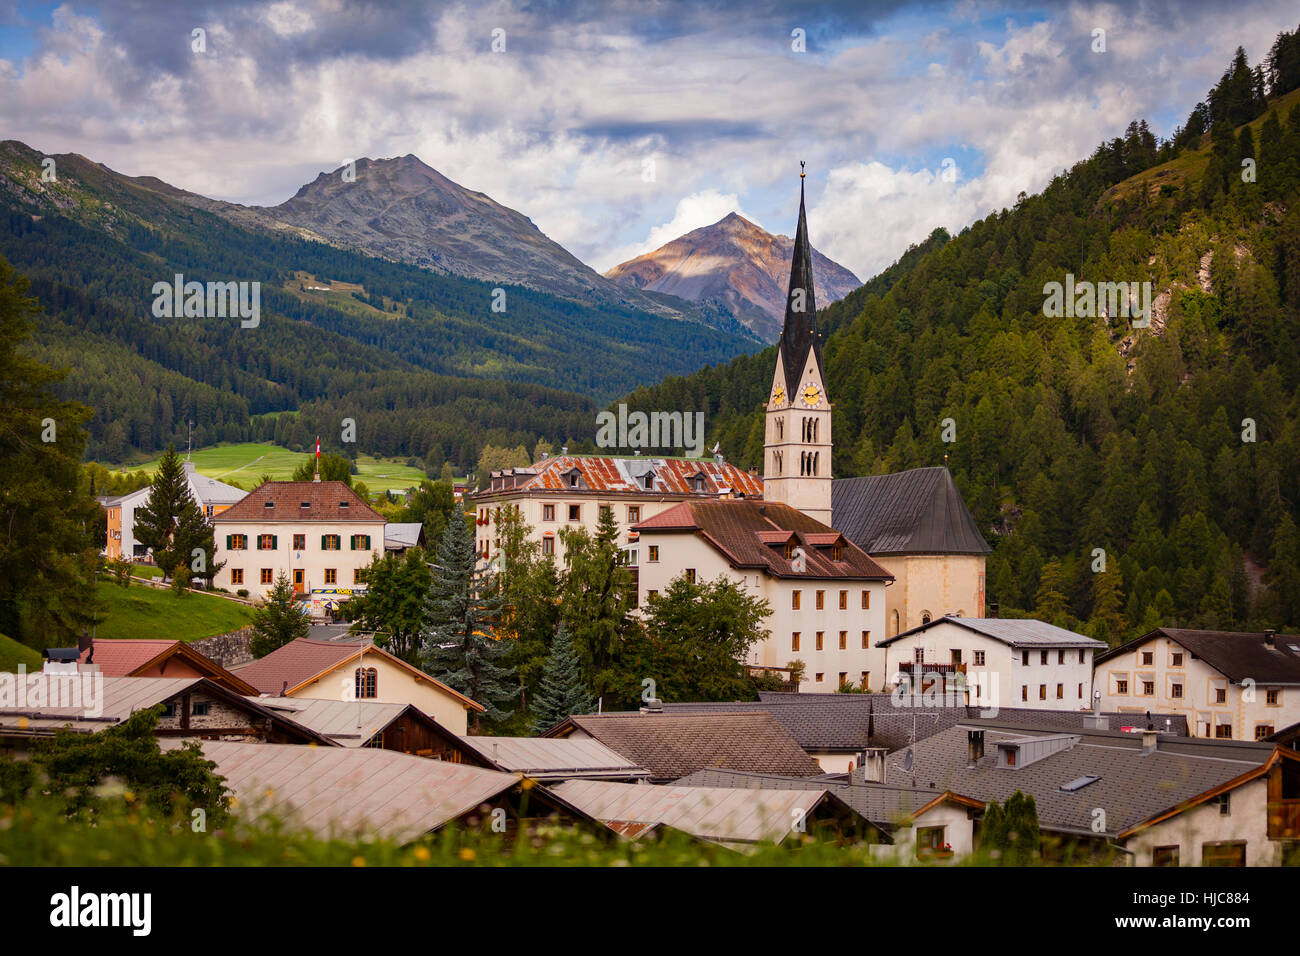 Church and rooftops of Santa Maria village, South Tyrol, Italy Stock Photo